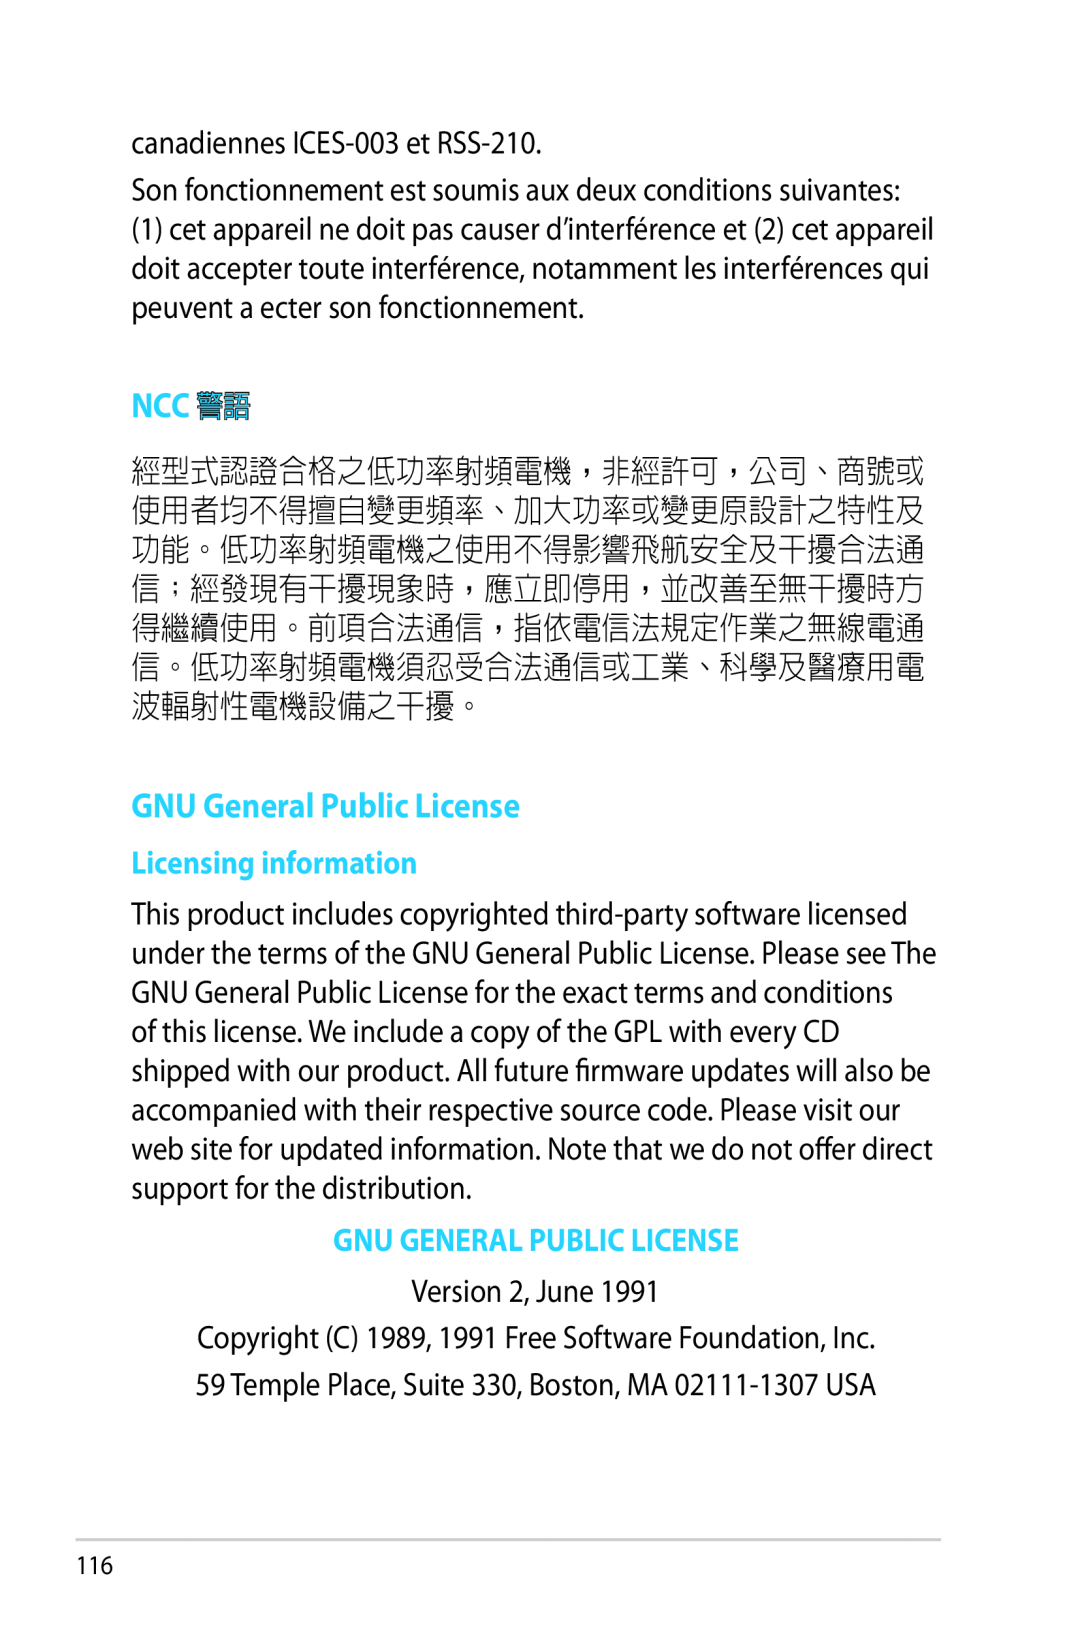 Asus RTAC68U manual Ncc 警語, GNU General Public License, Licensing information, Gnu General Public License 